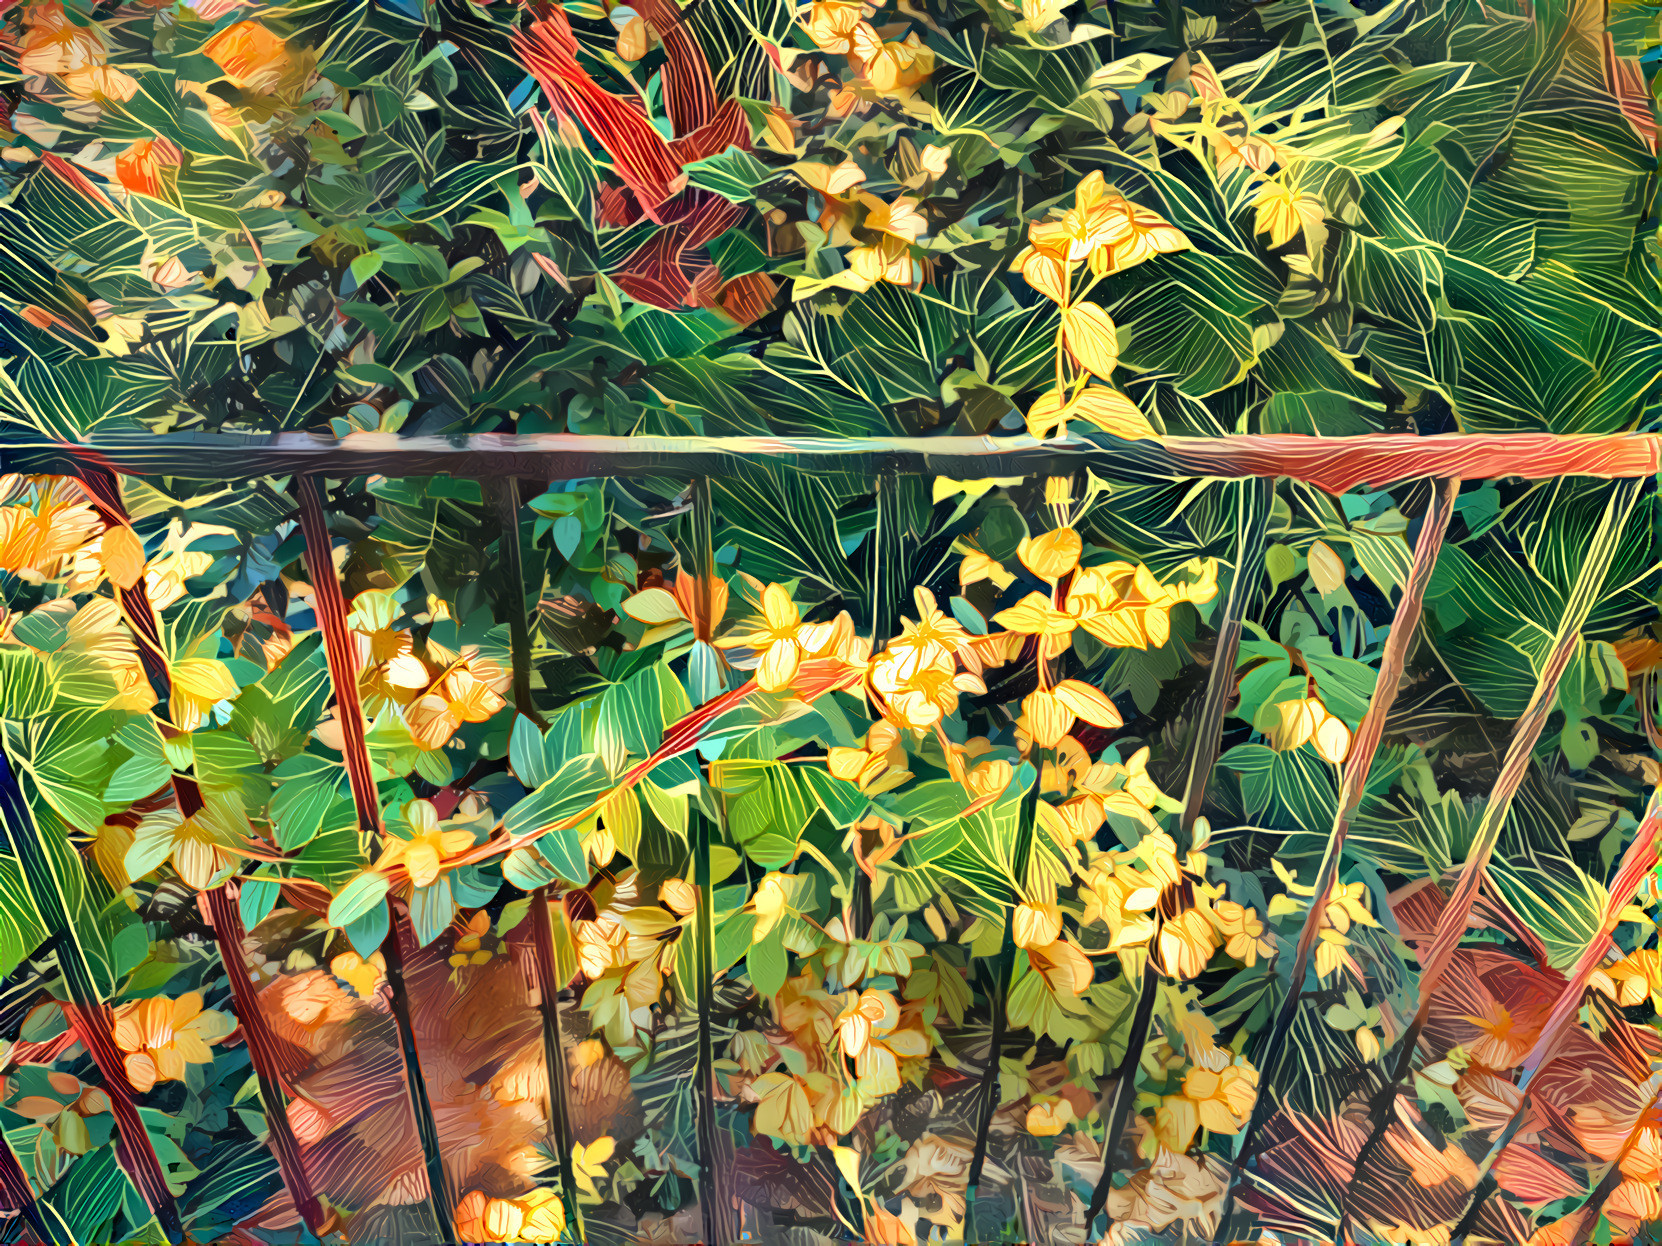 Vibrant, leafy fence